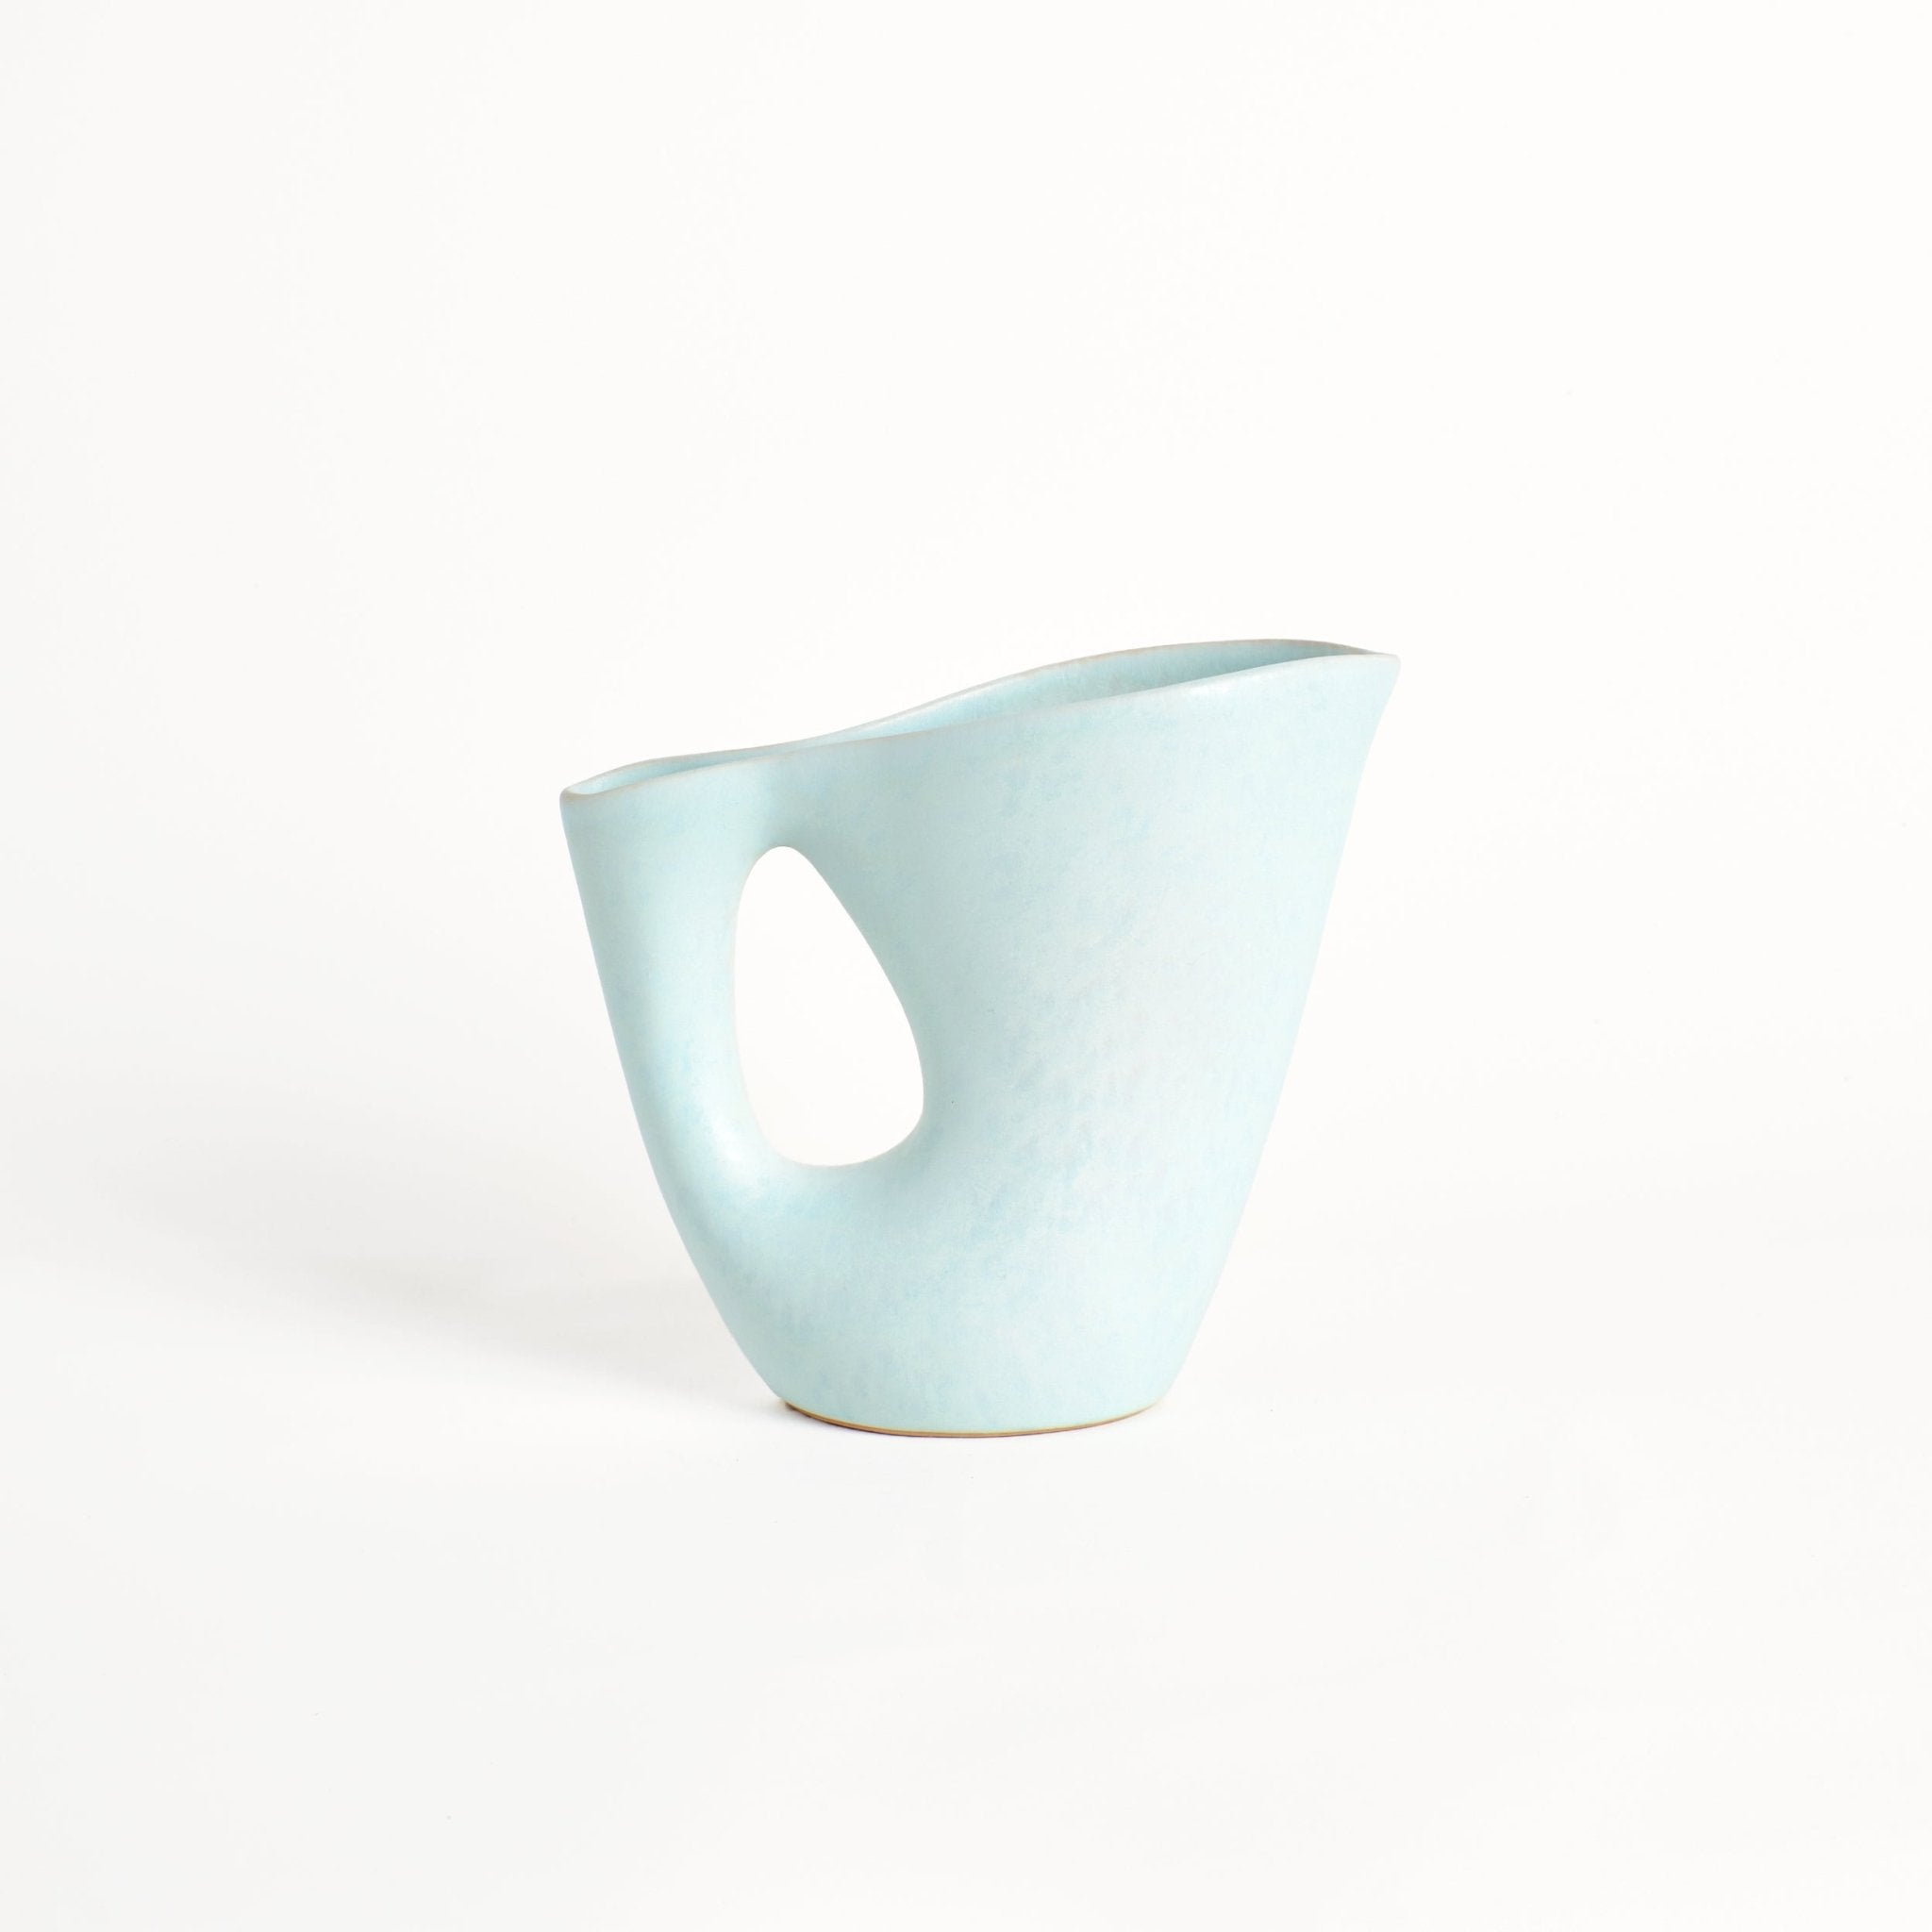 Mamasita Jug - Light blue vase by Project 213A